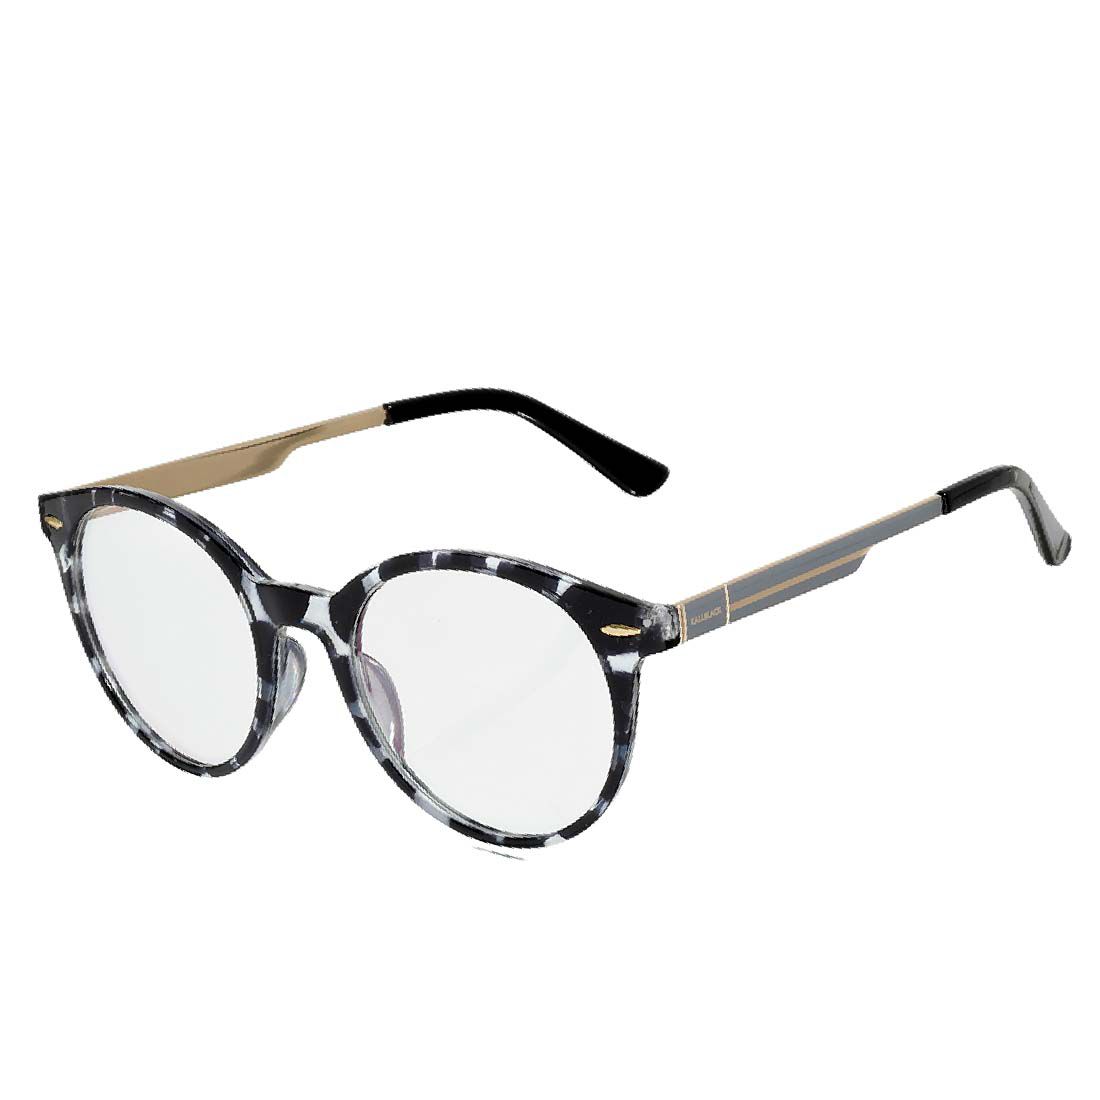 Oculos Armação Grau Feminino Redondo Kallblack AF68260 Ibiza - Kallblack